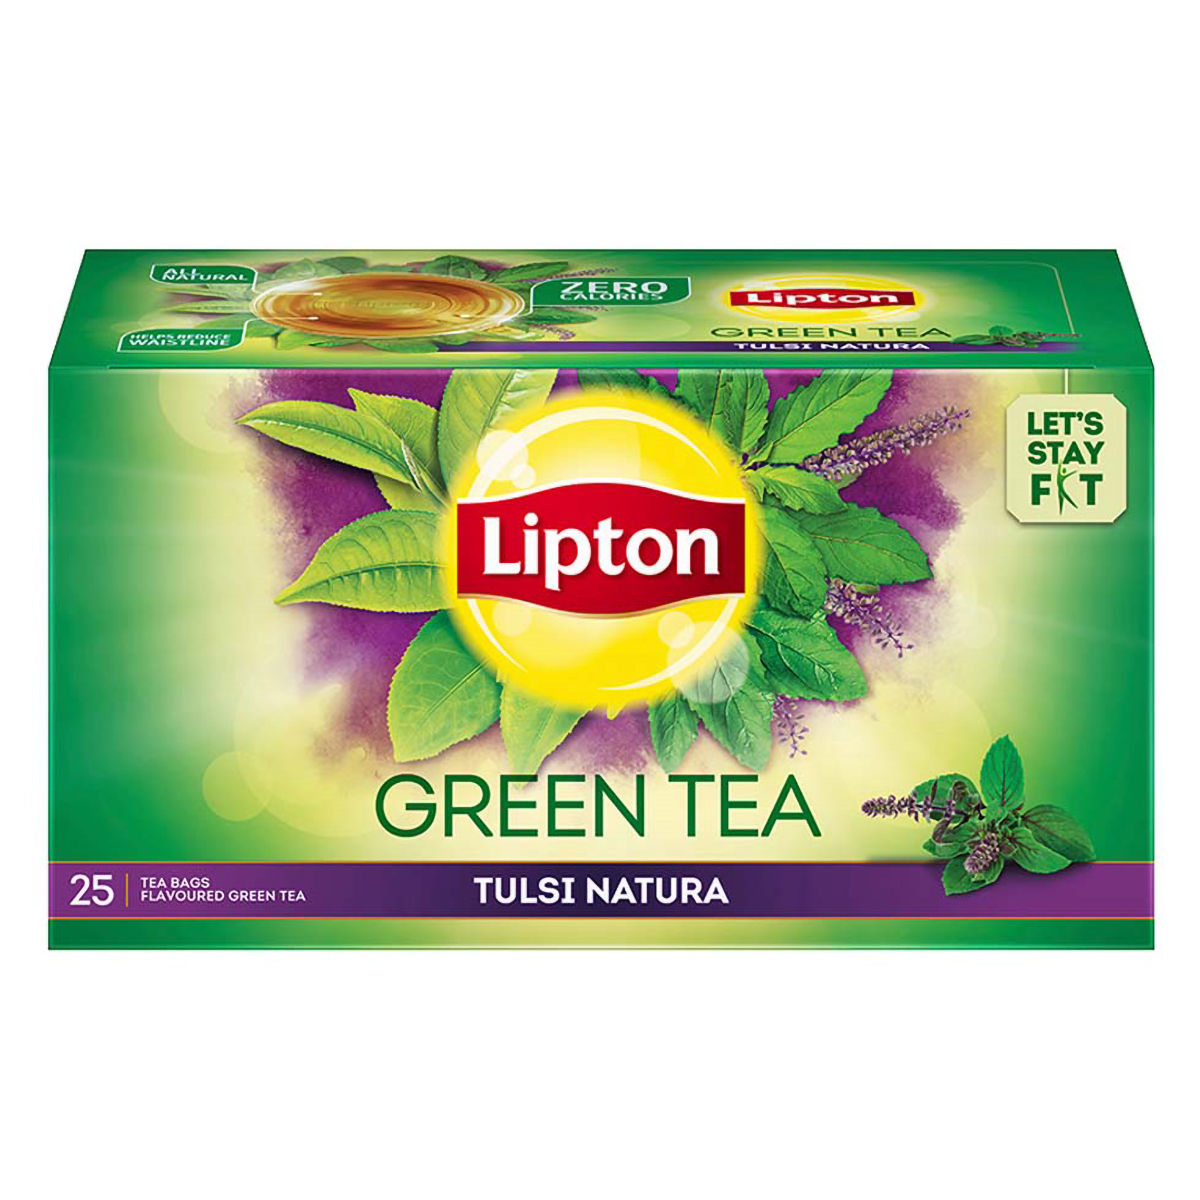 Buy Lipton Tulsi Natura Green Tea Bags, 25 Count Online